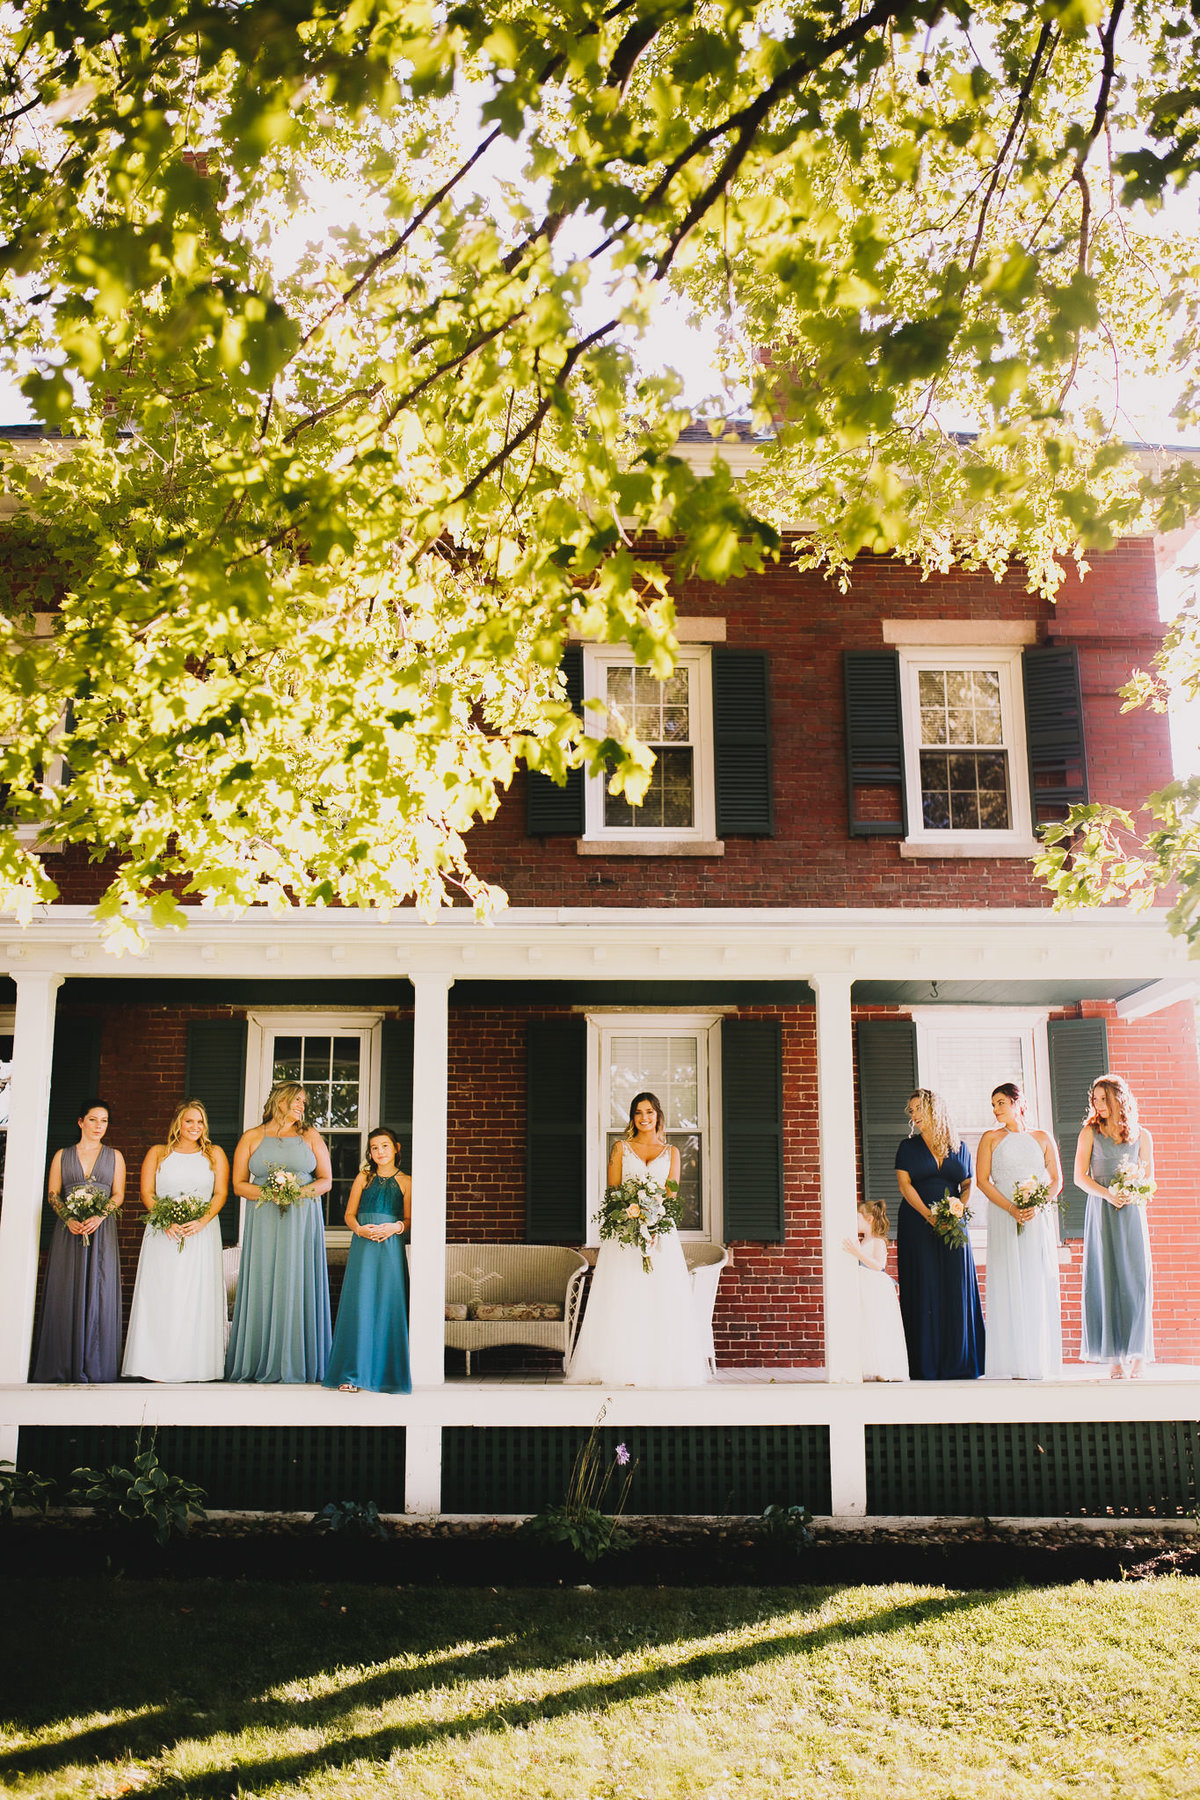 Archer Inspired Photography - Maine Wedding - SoCal International Traveling Photographer-380